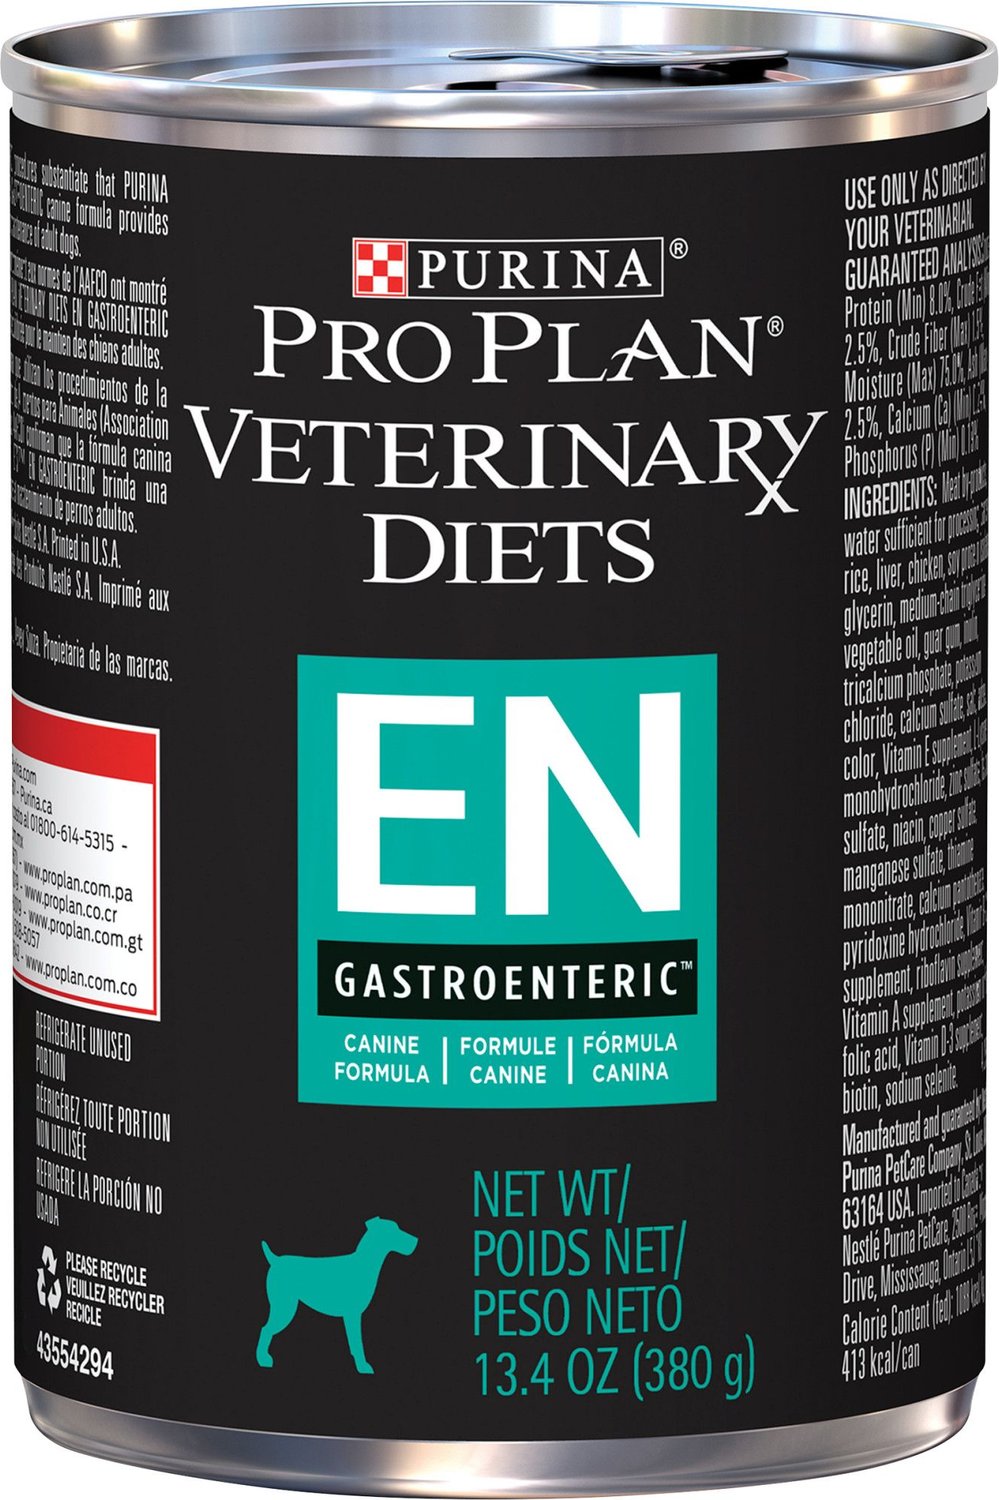 Pro plan veterinary diets gastrointestinal для собак